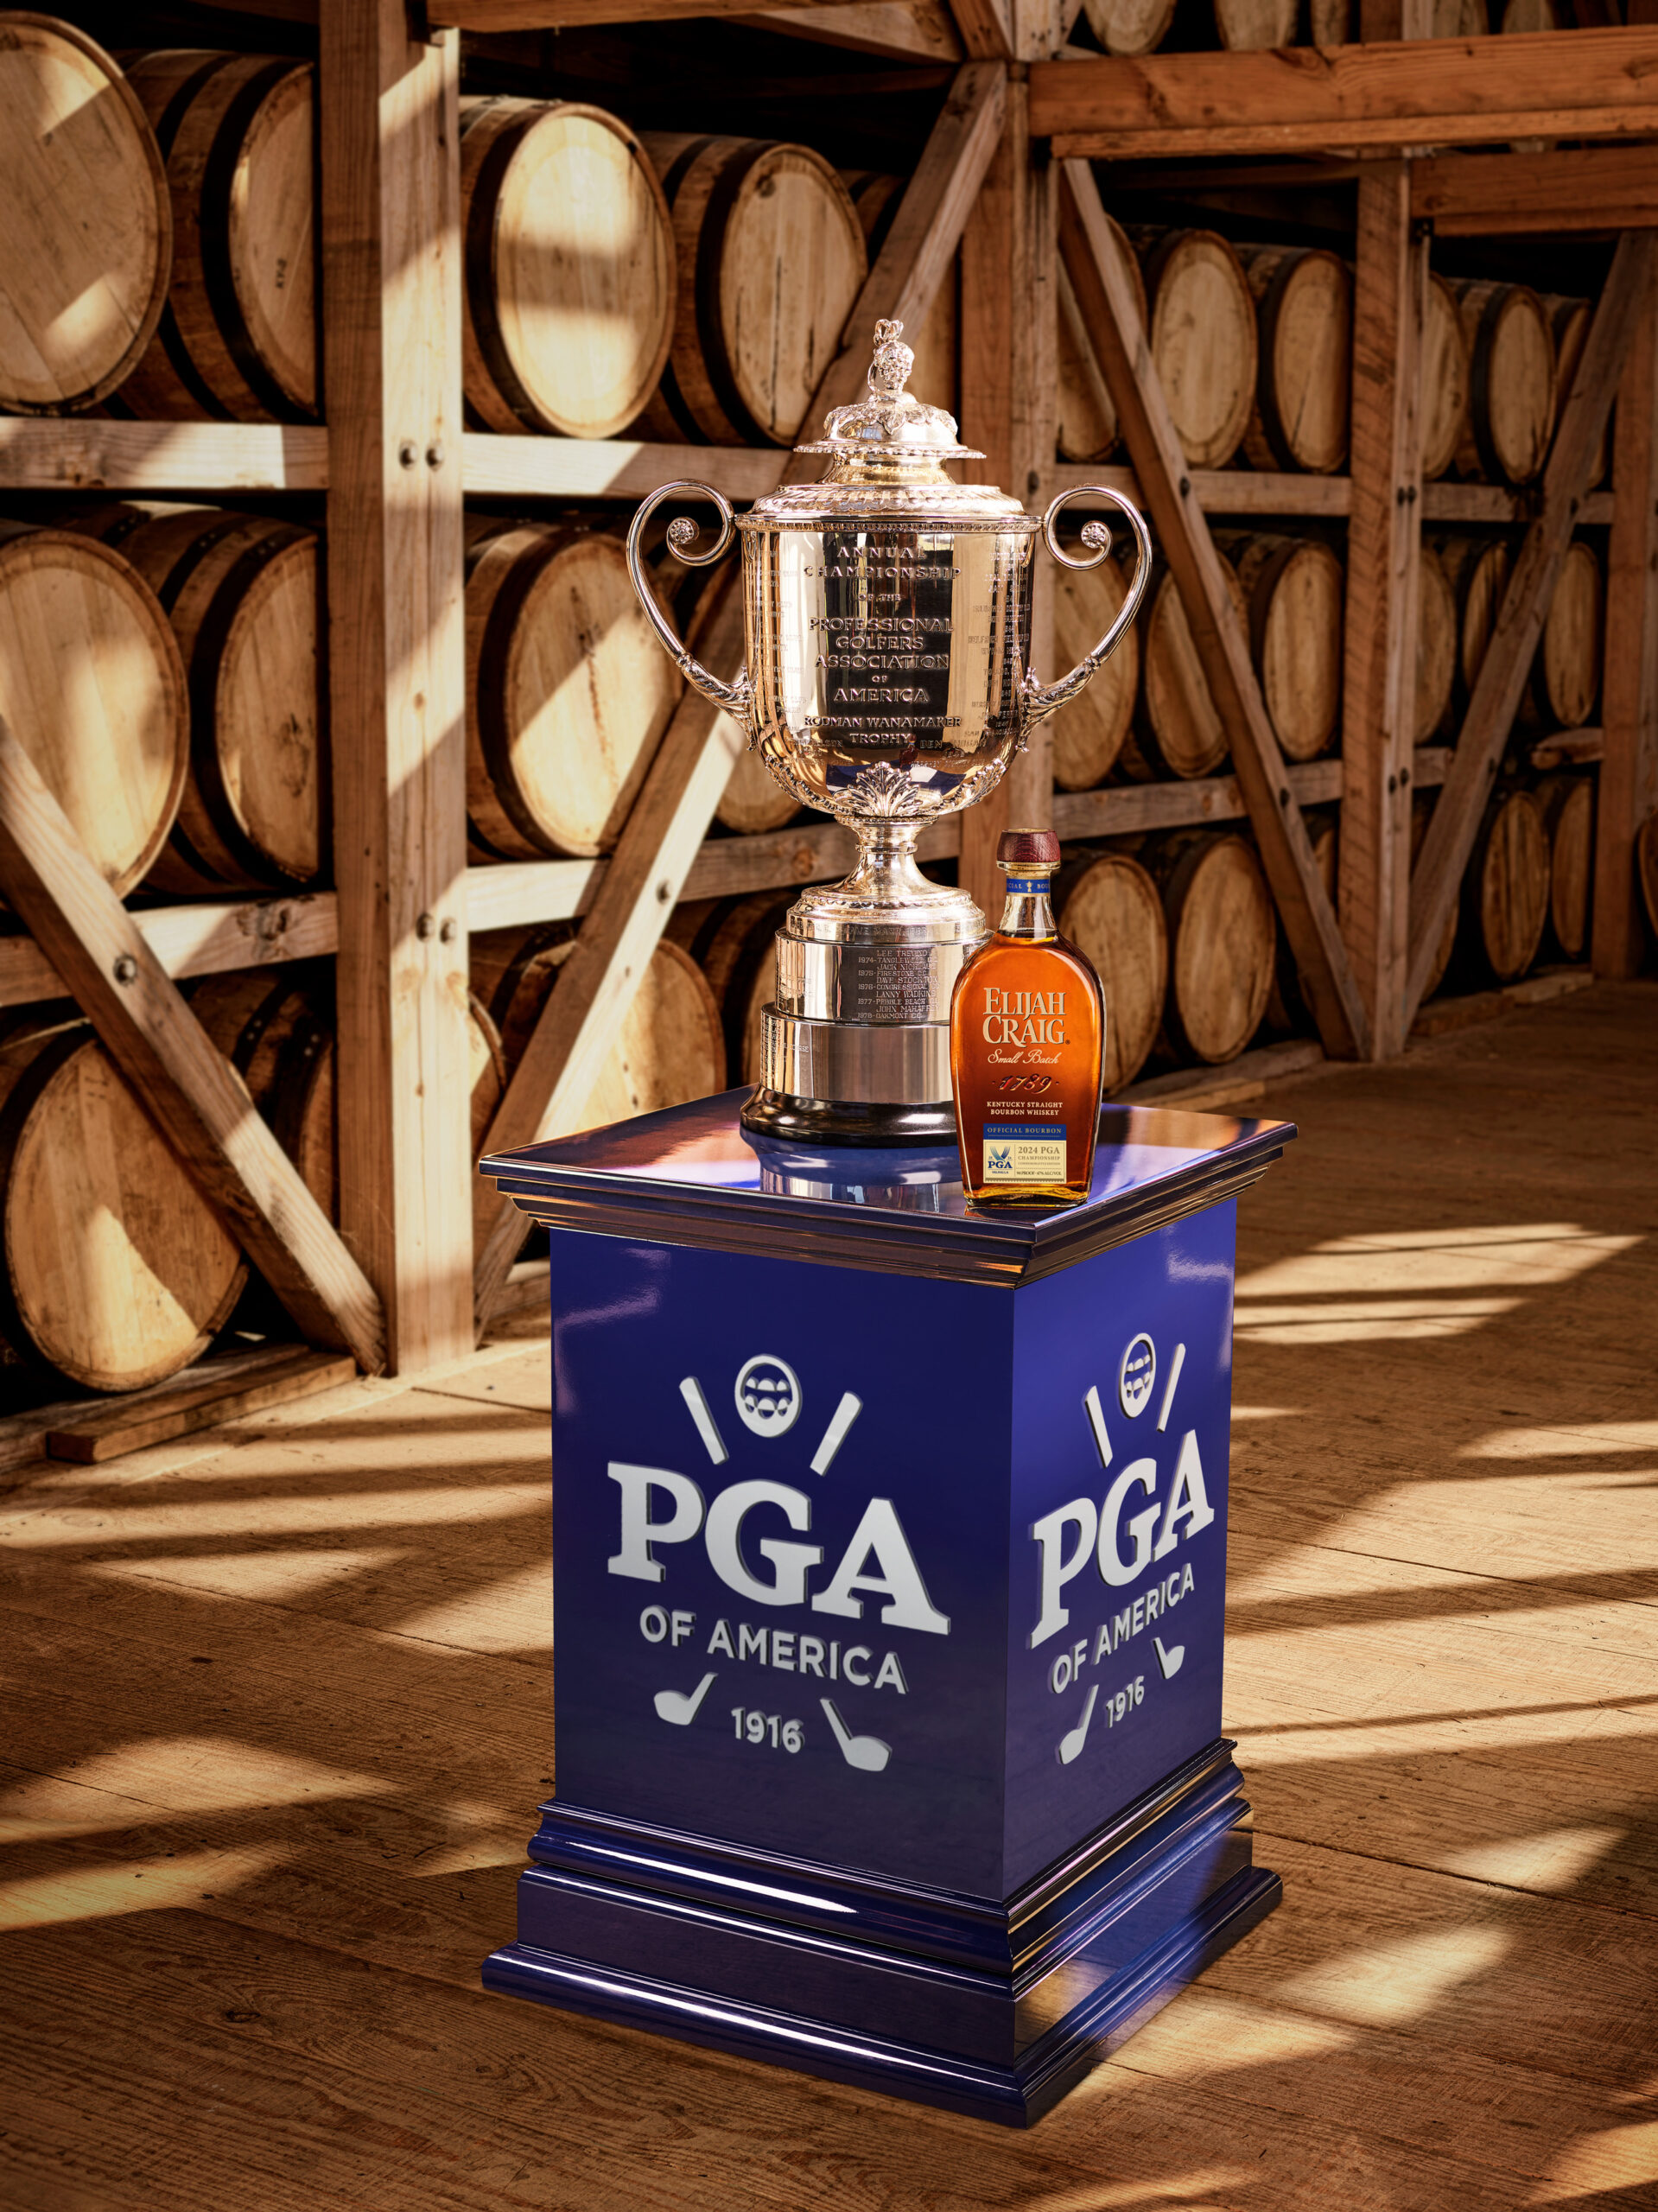 Elijah Craig Celebrates Louisville’s PGA Championship with New Commemorative Bottle